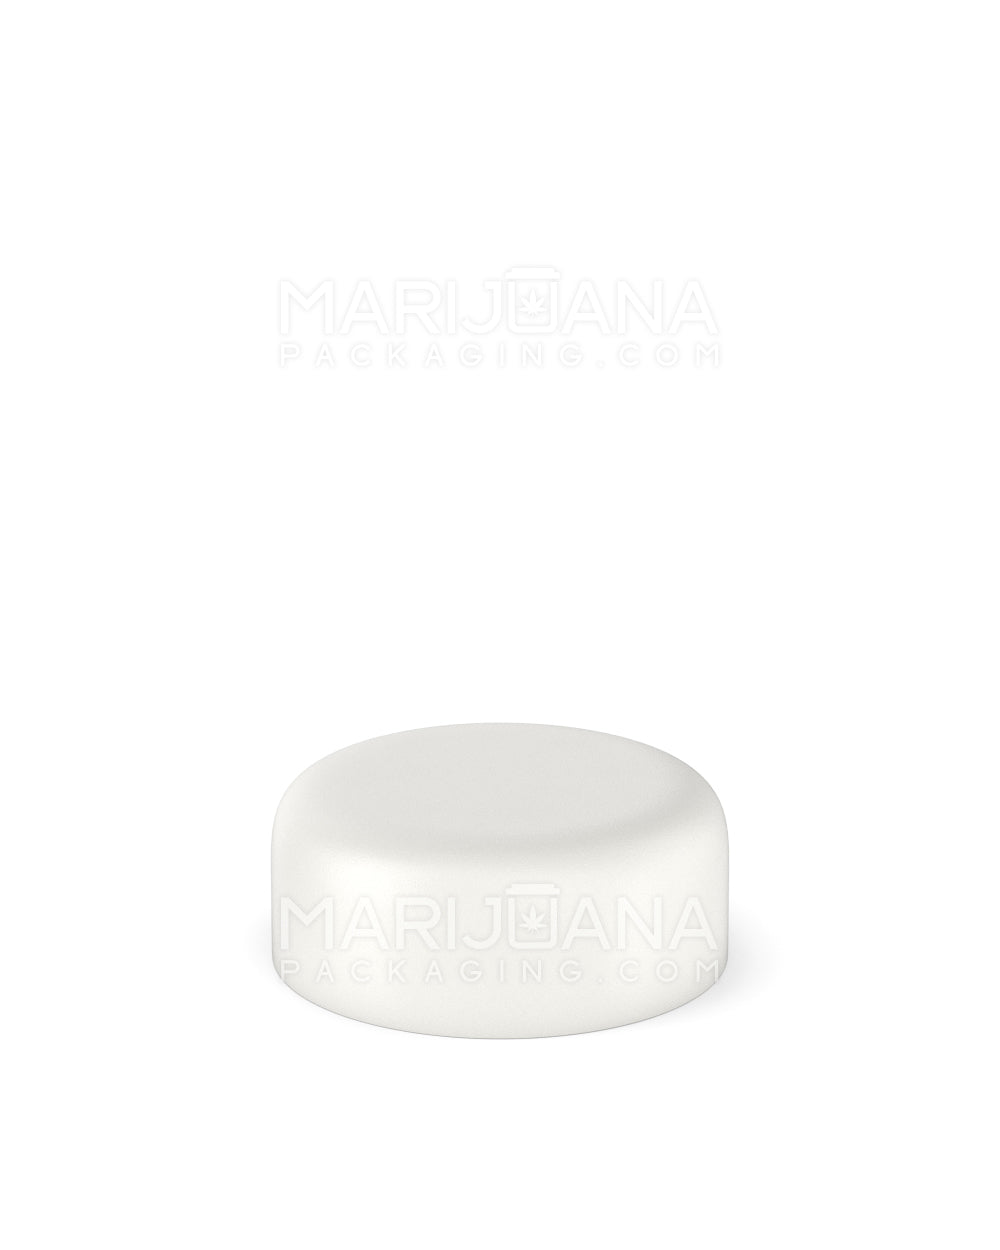 POLLEN GEAR | HiLine Child Resistant Smooth Push Down & Turn Plastic Round Caps w/ Foam Liner | 28mm - Matte White - 308 Count - 3